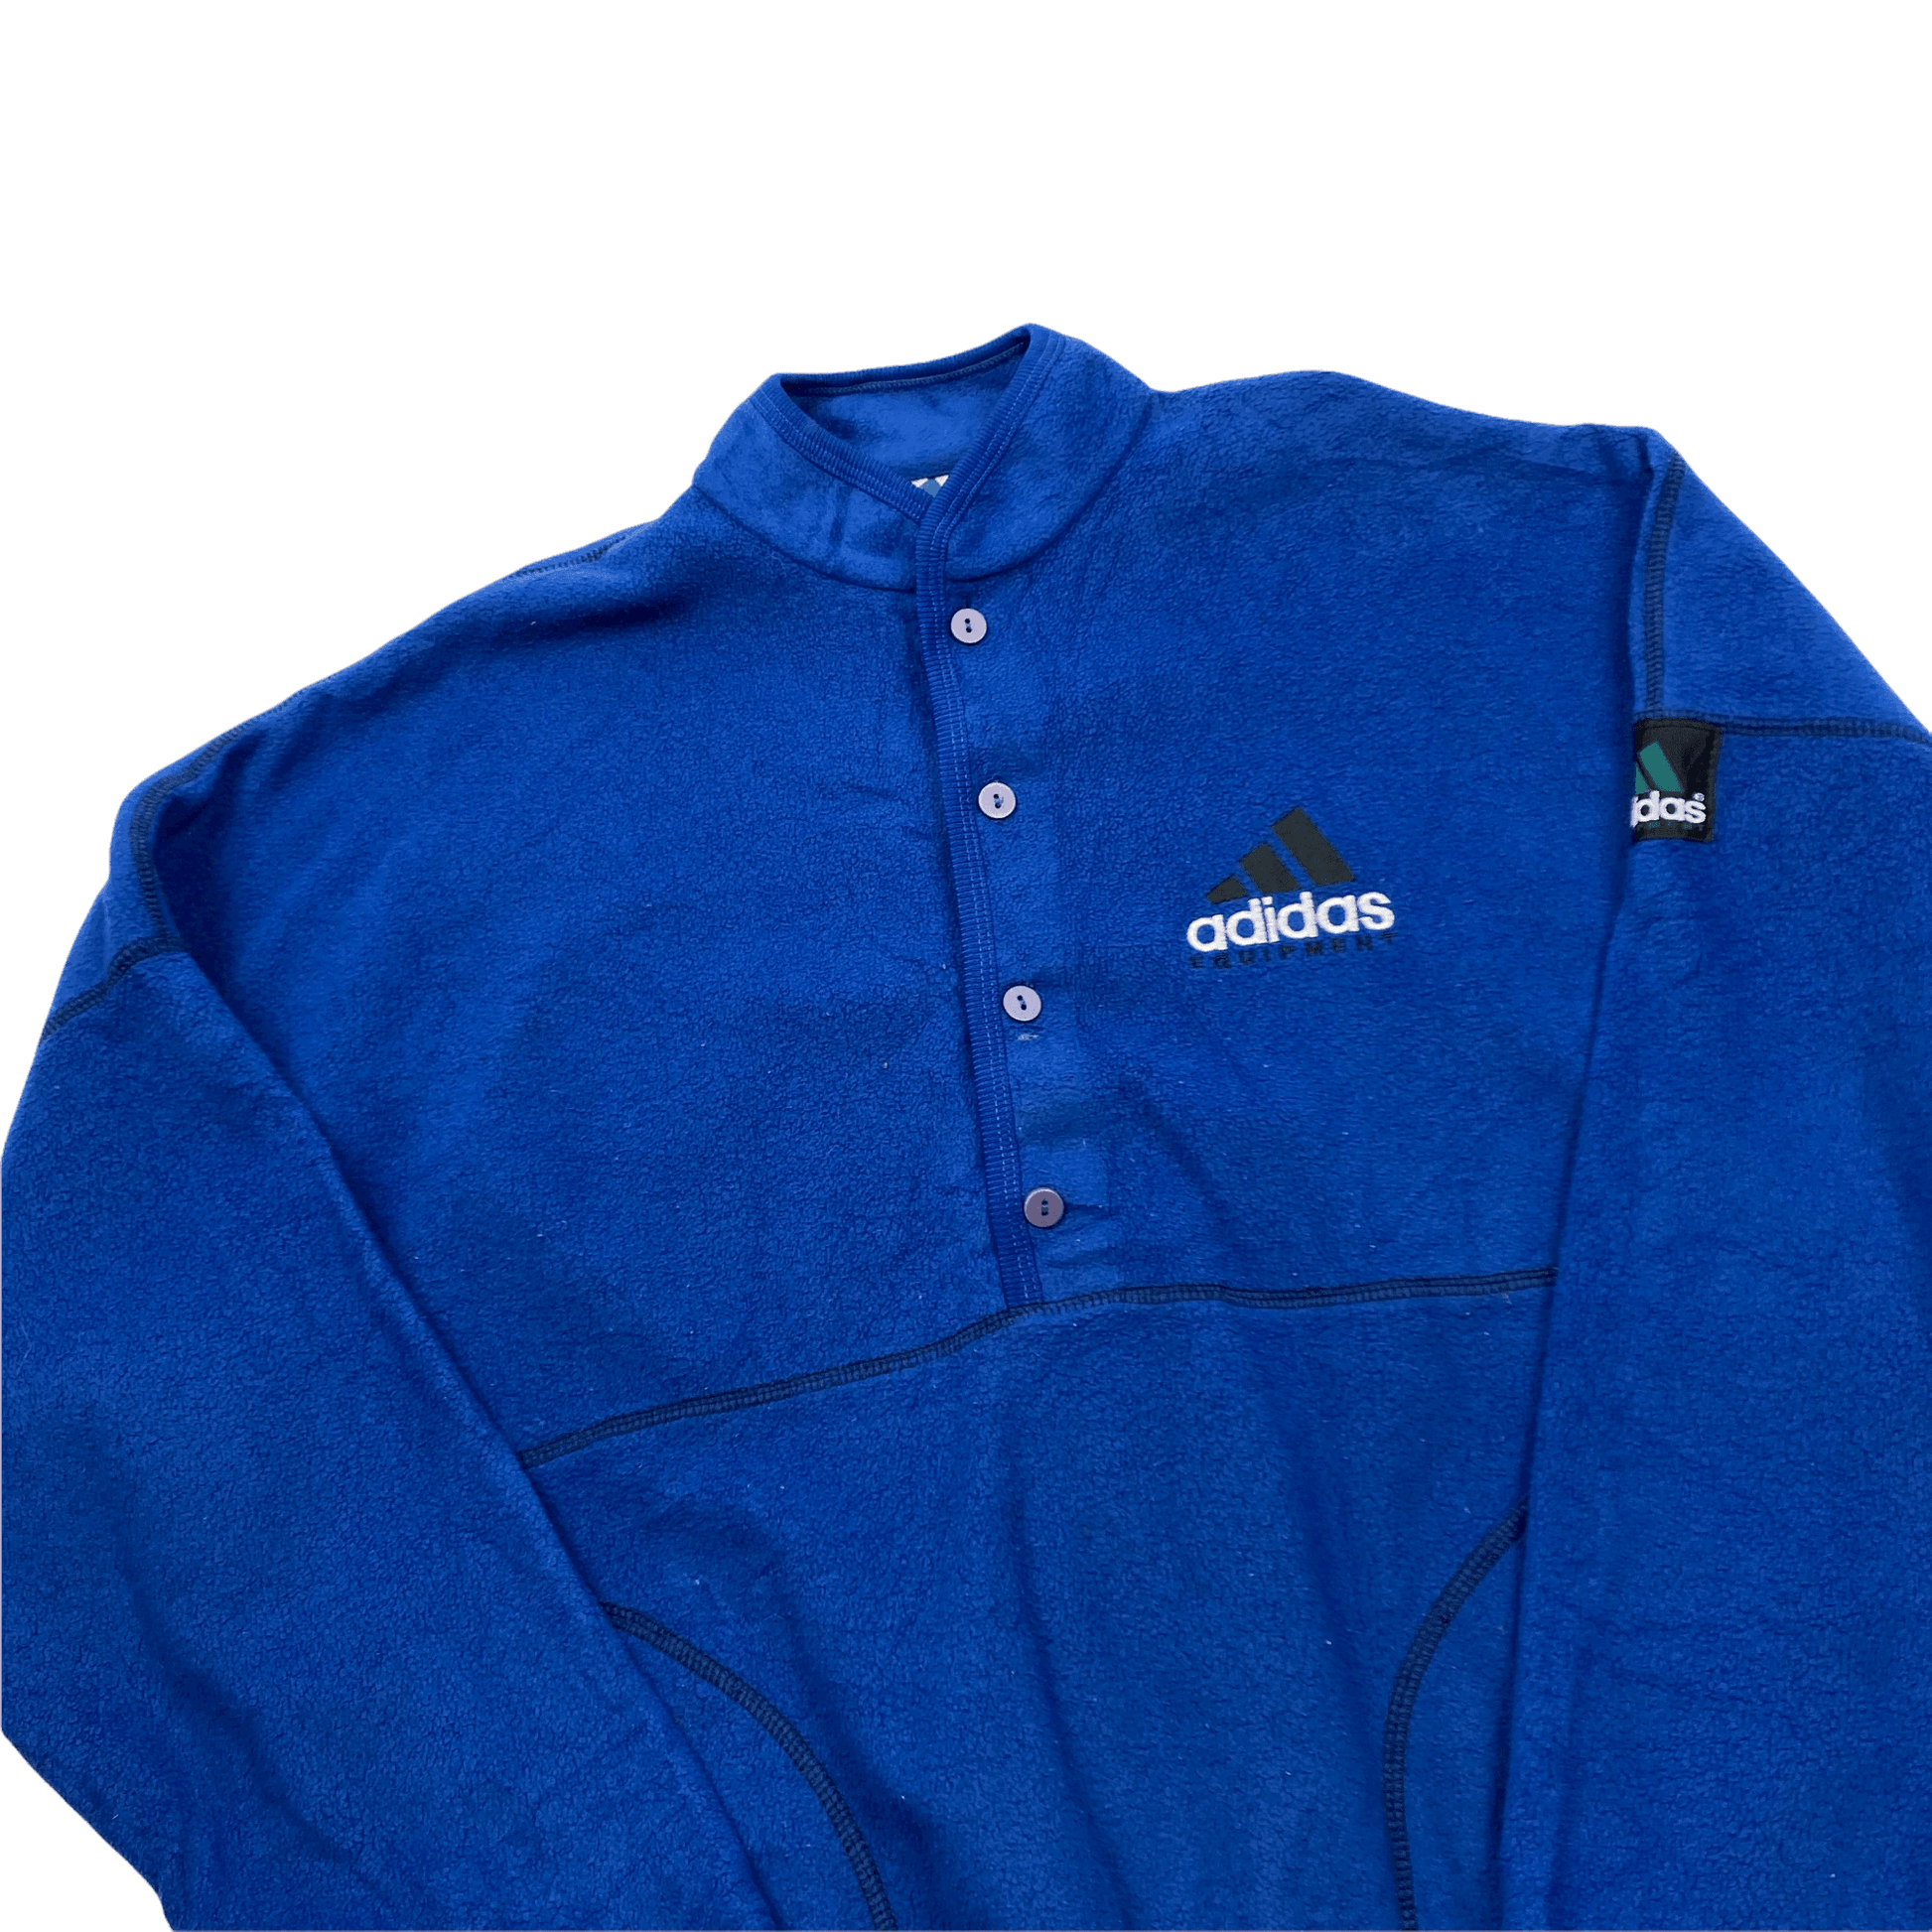 Vintage 90s Blue Adidas Equipment Spell-Out Fleece Sweatshirt - Medium - The Streetwear Studio